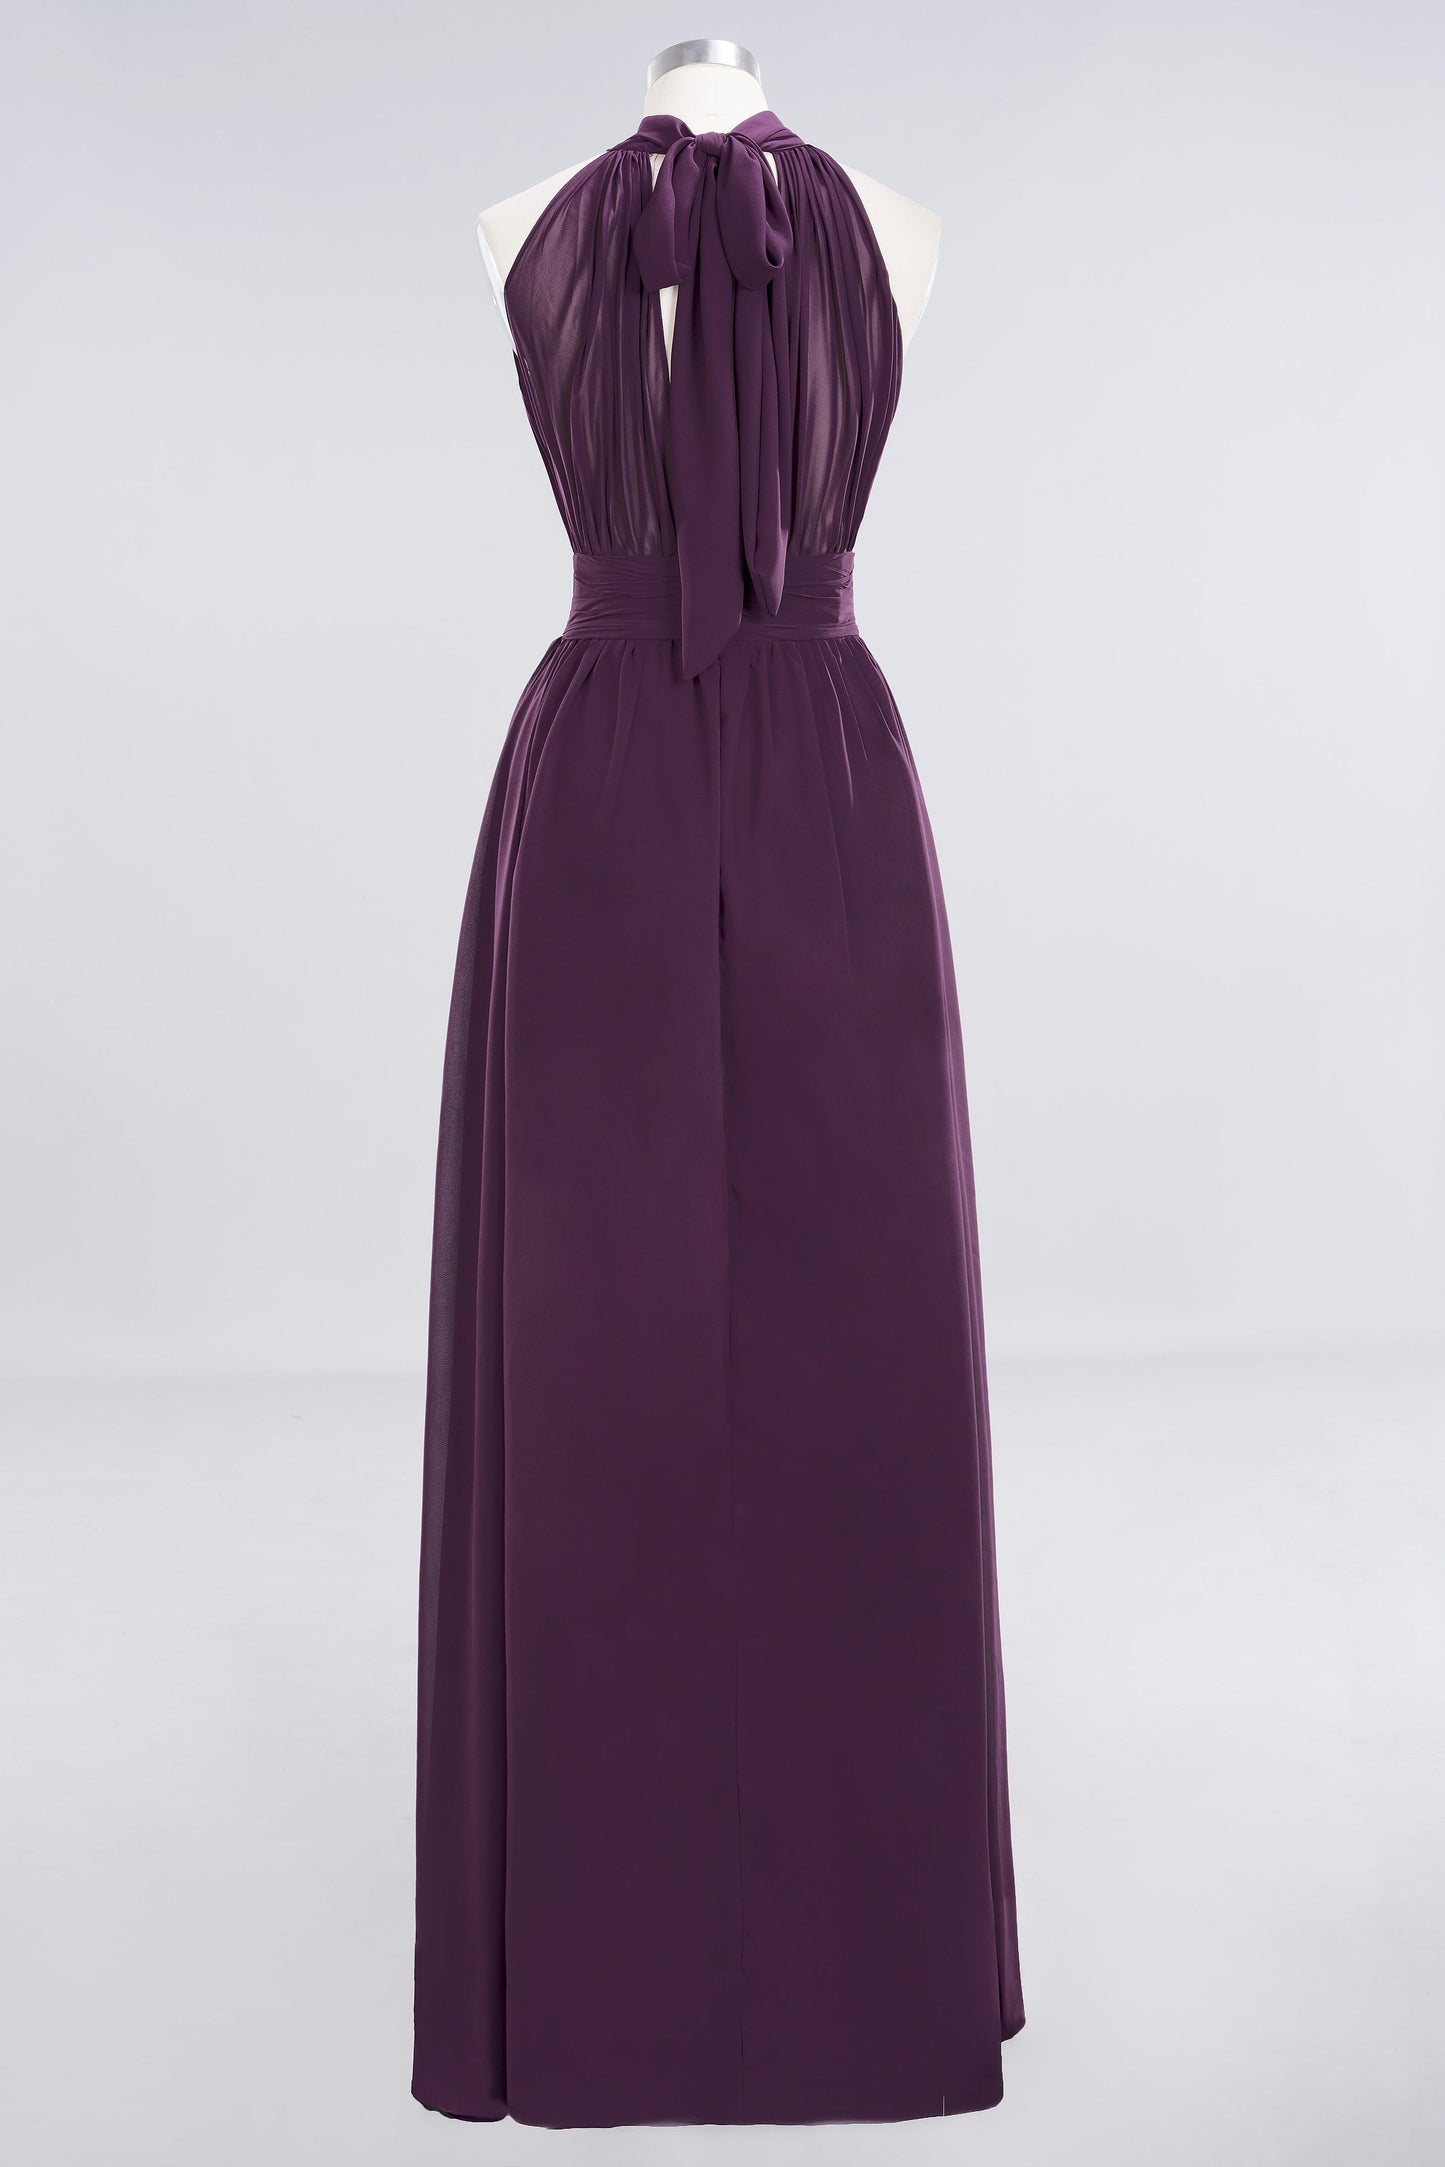 High Neck Purple Chiffon A-line Long Bridesmaid Dress 